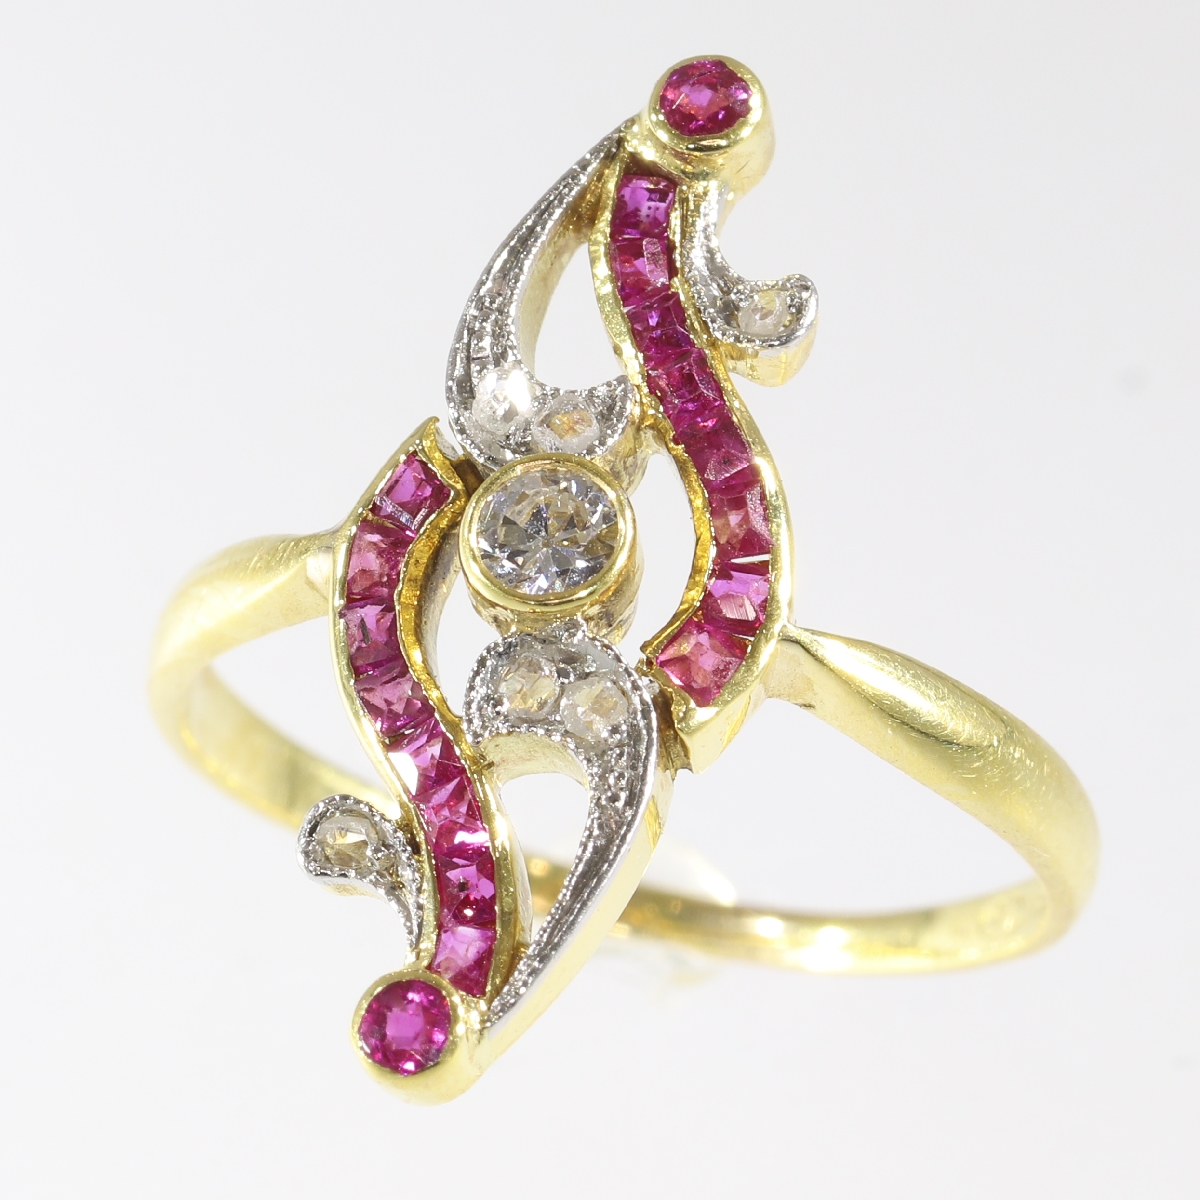 Elegant Belle Epoque ruby and diamond ring